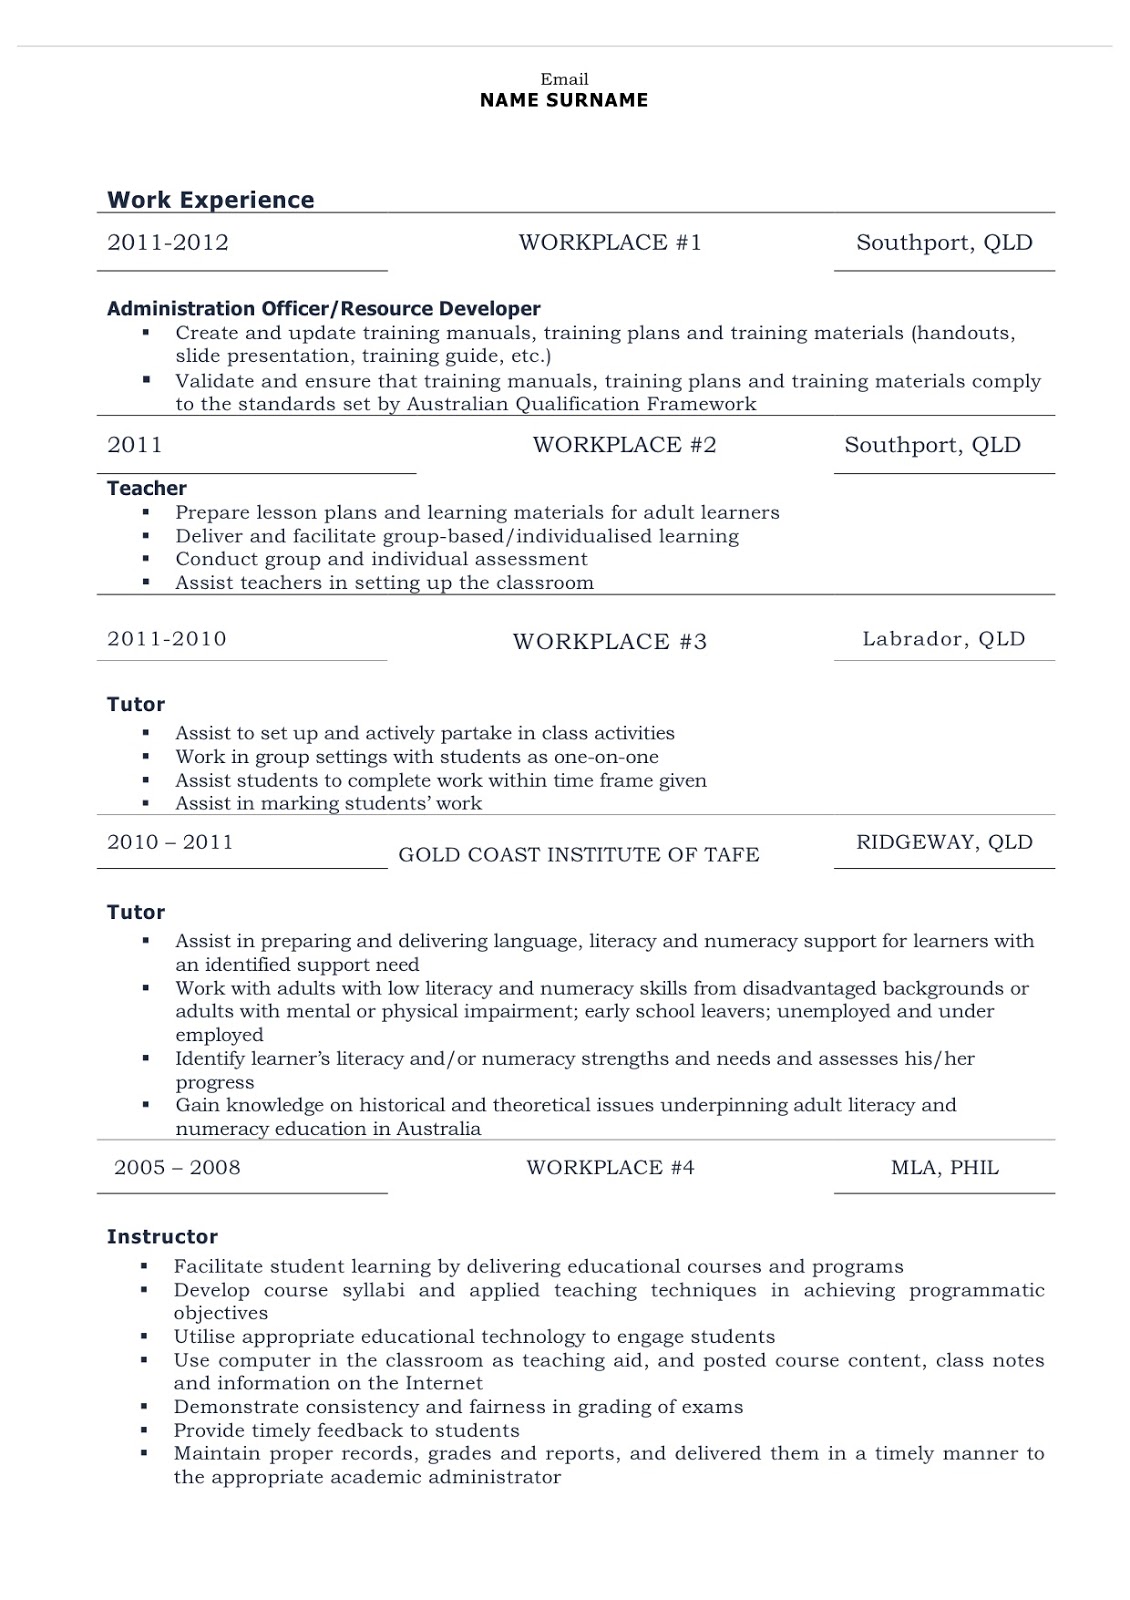 job-seek-101-how-to-write-a-resume-combination-resume